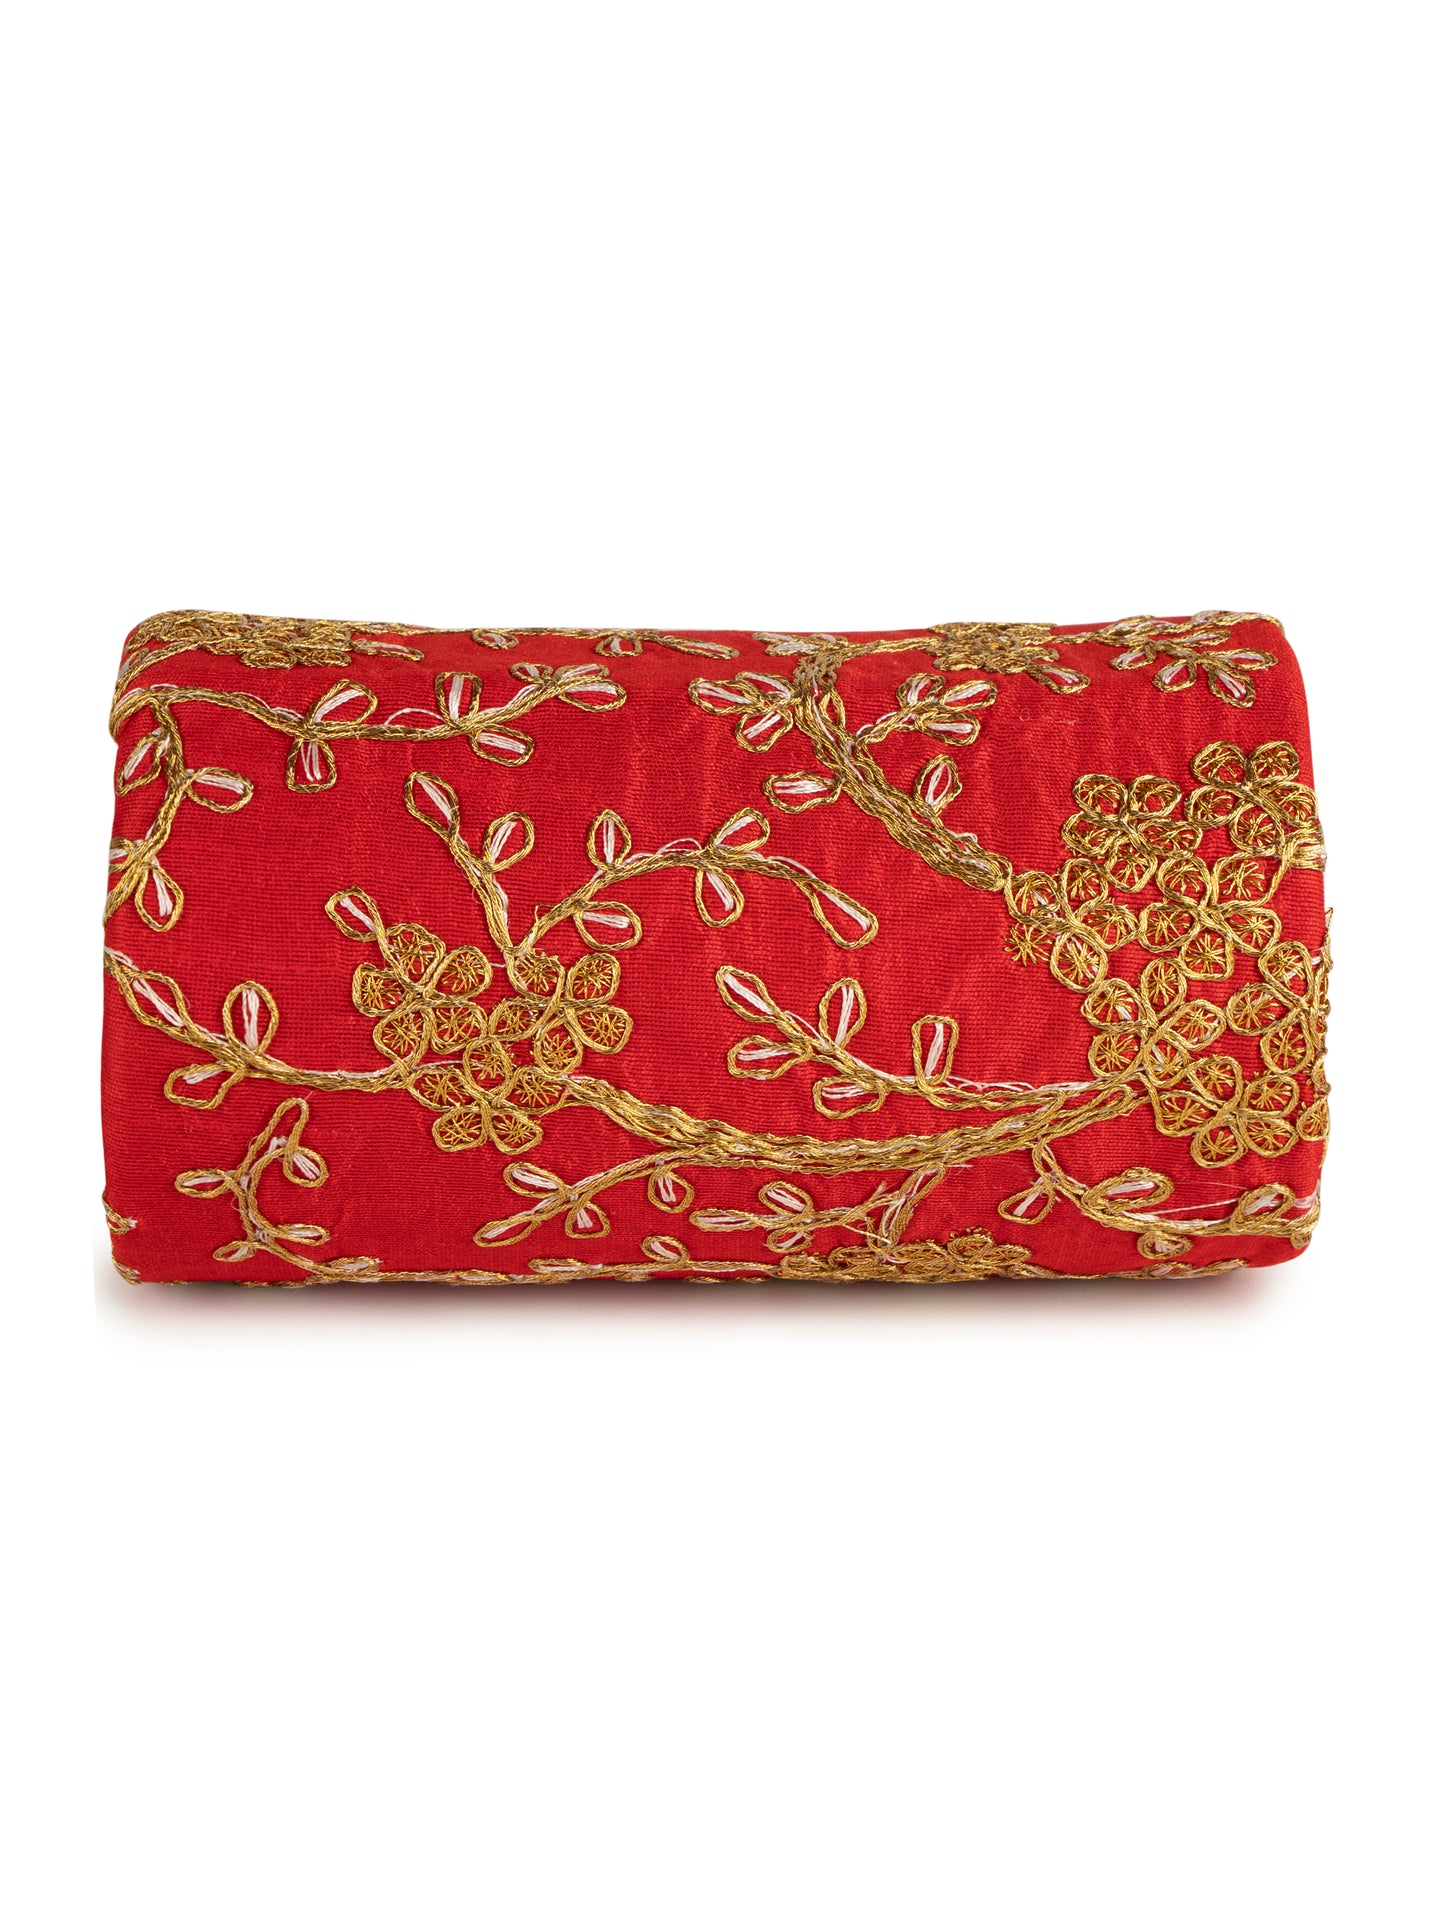 Red golden zari embroidered bangle organizer box